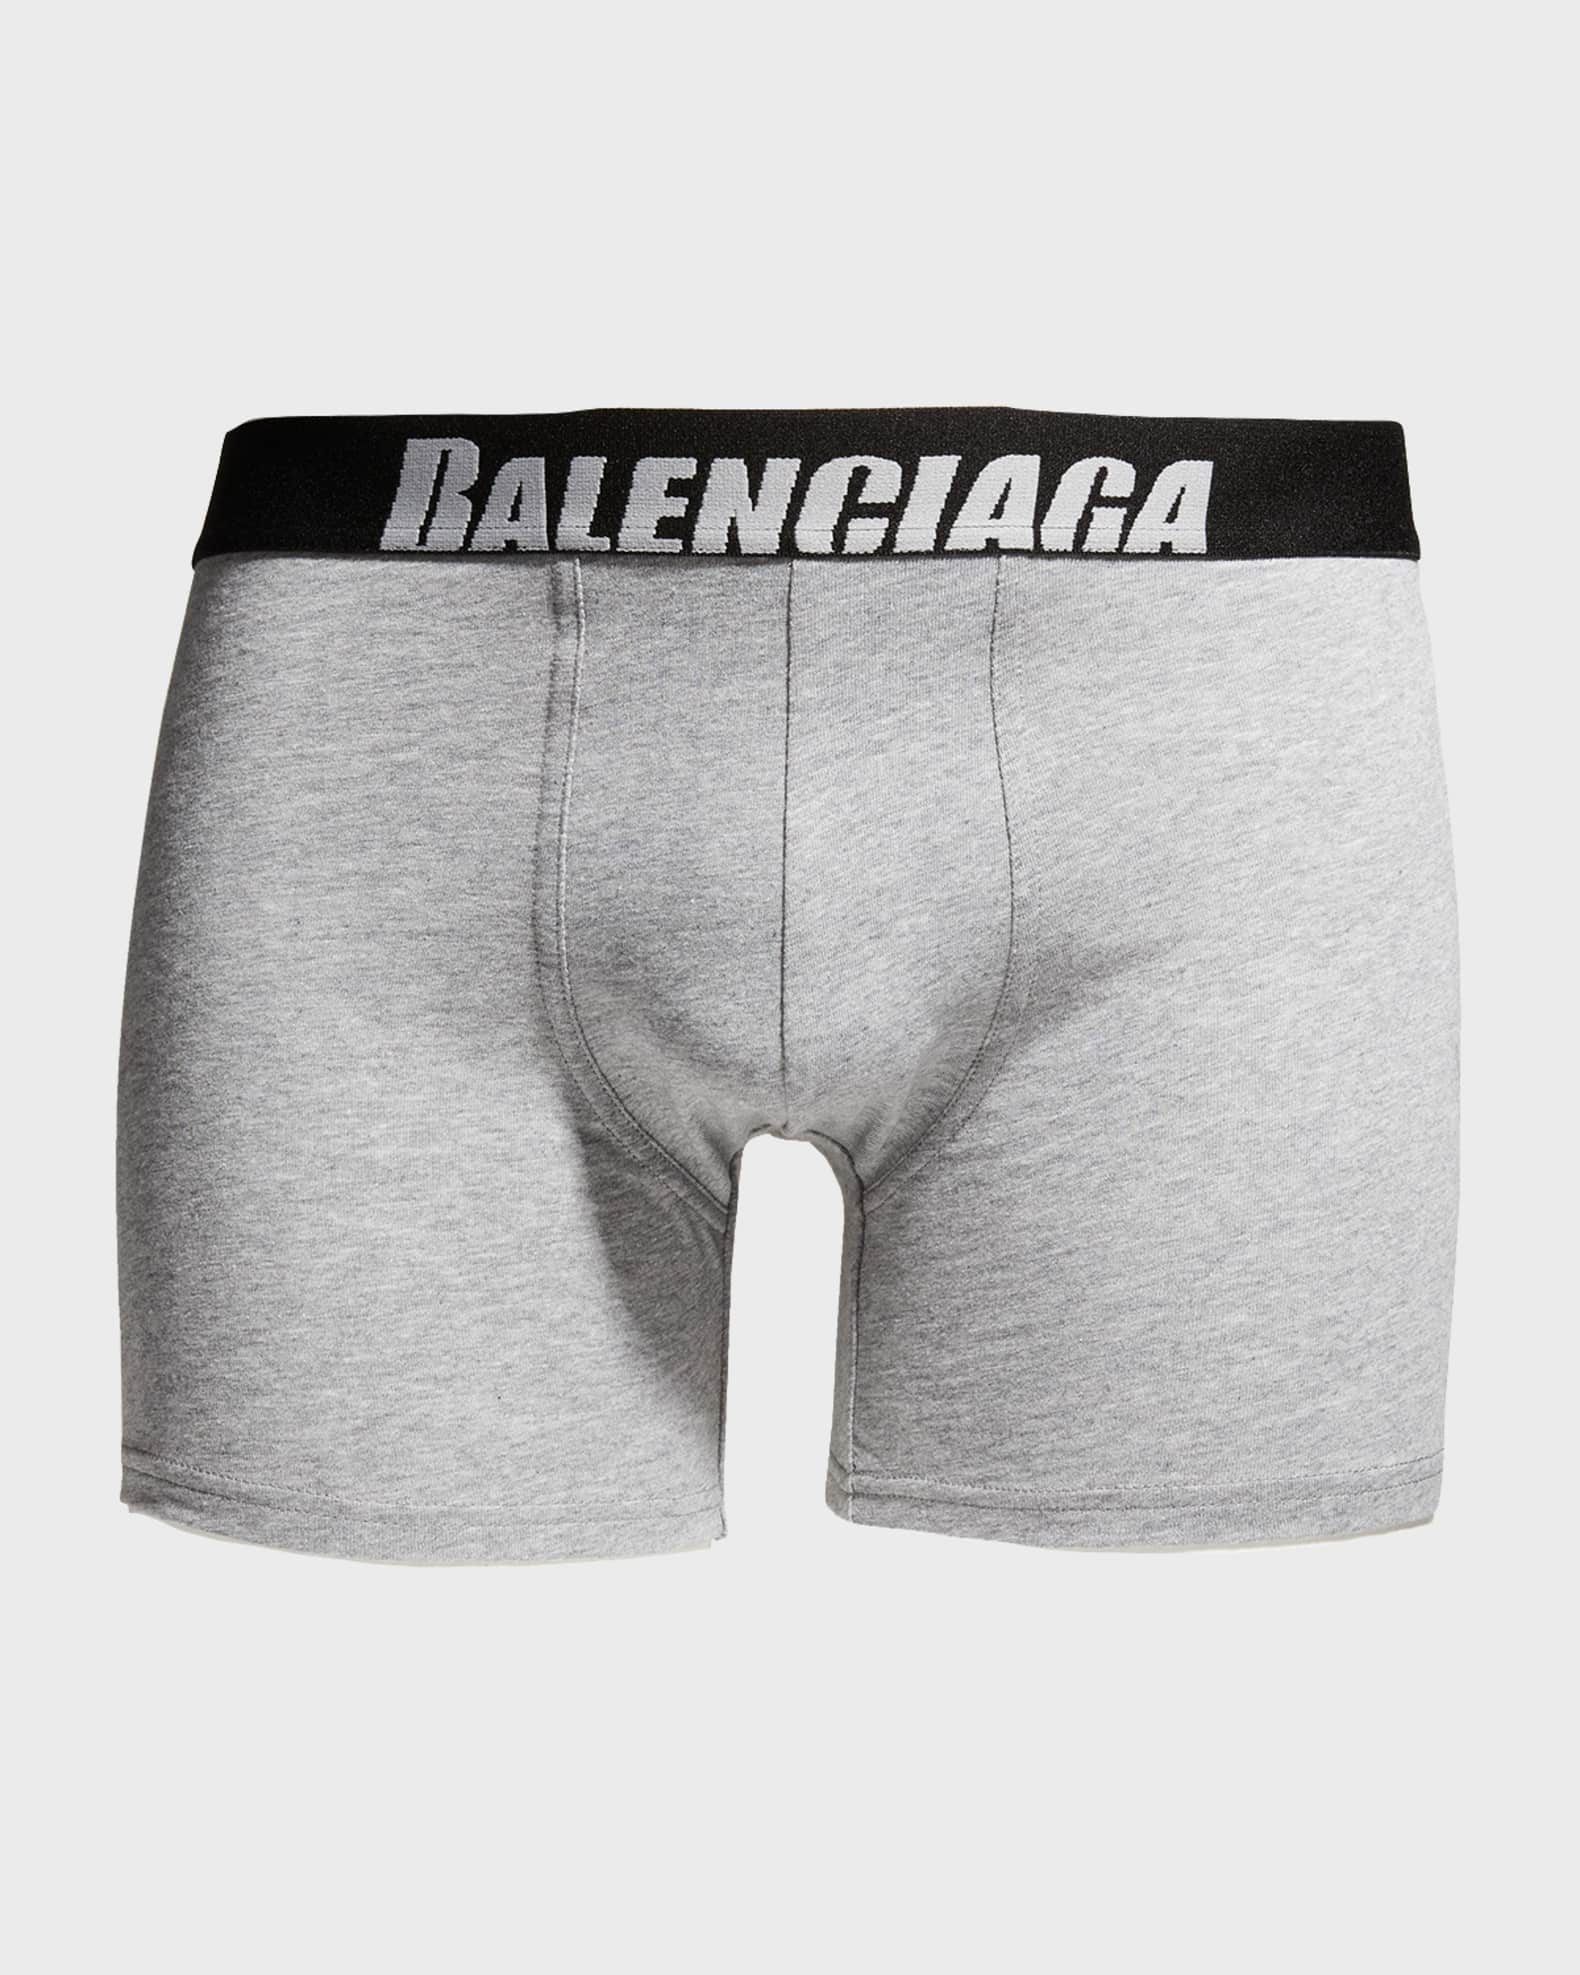 Balenciaga Boxer Shorts In Black White